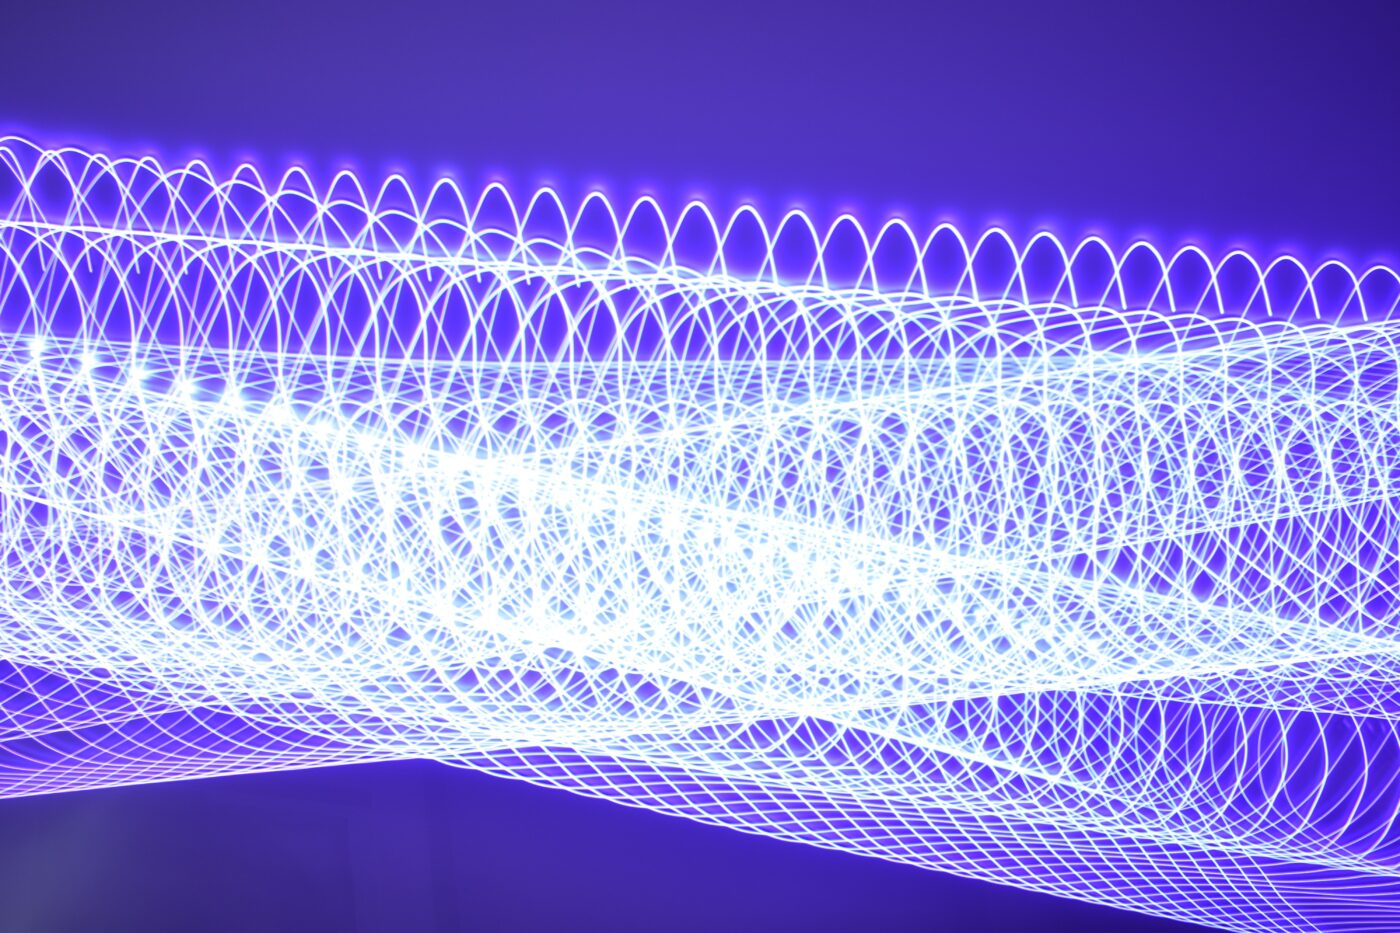 Luce LED che simula i filamenti di DNA